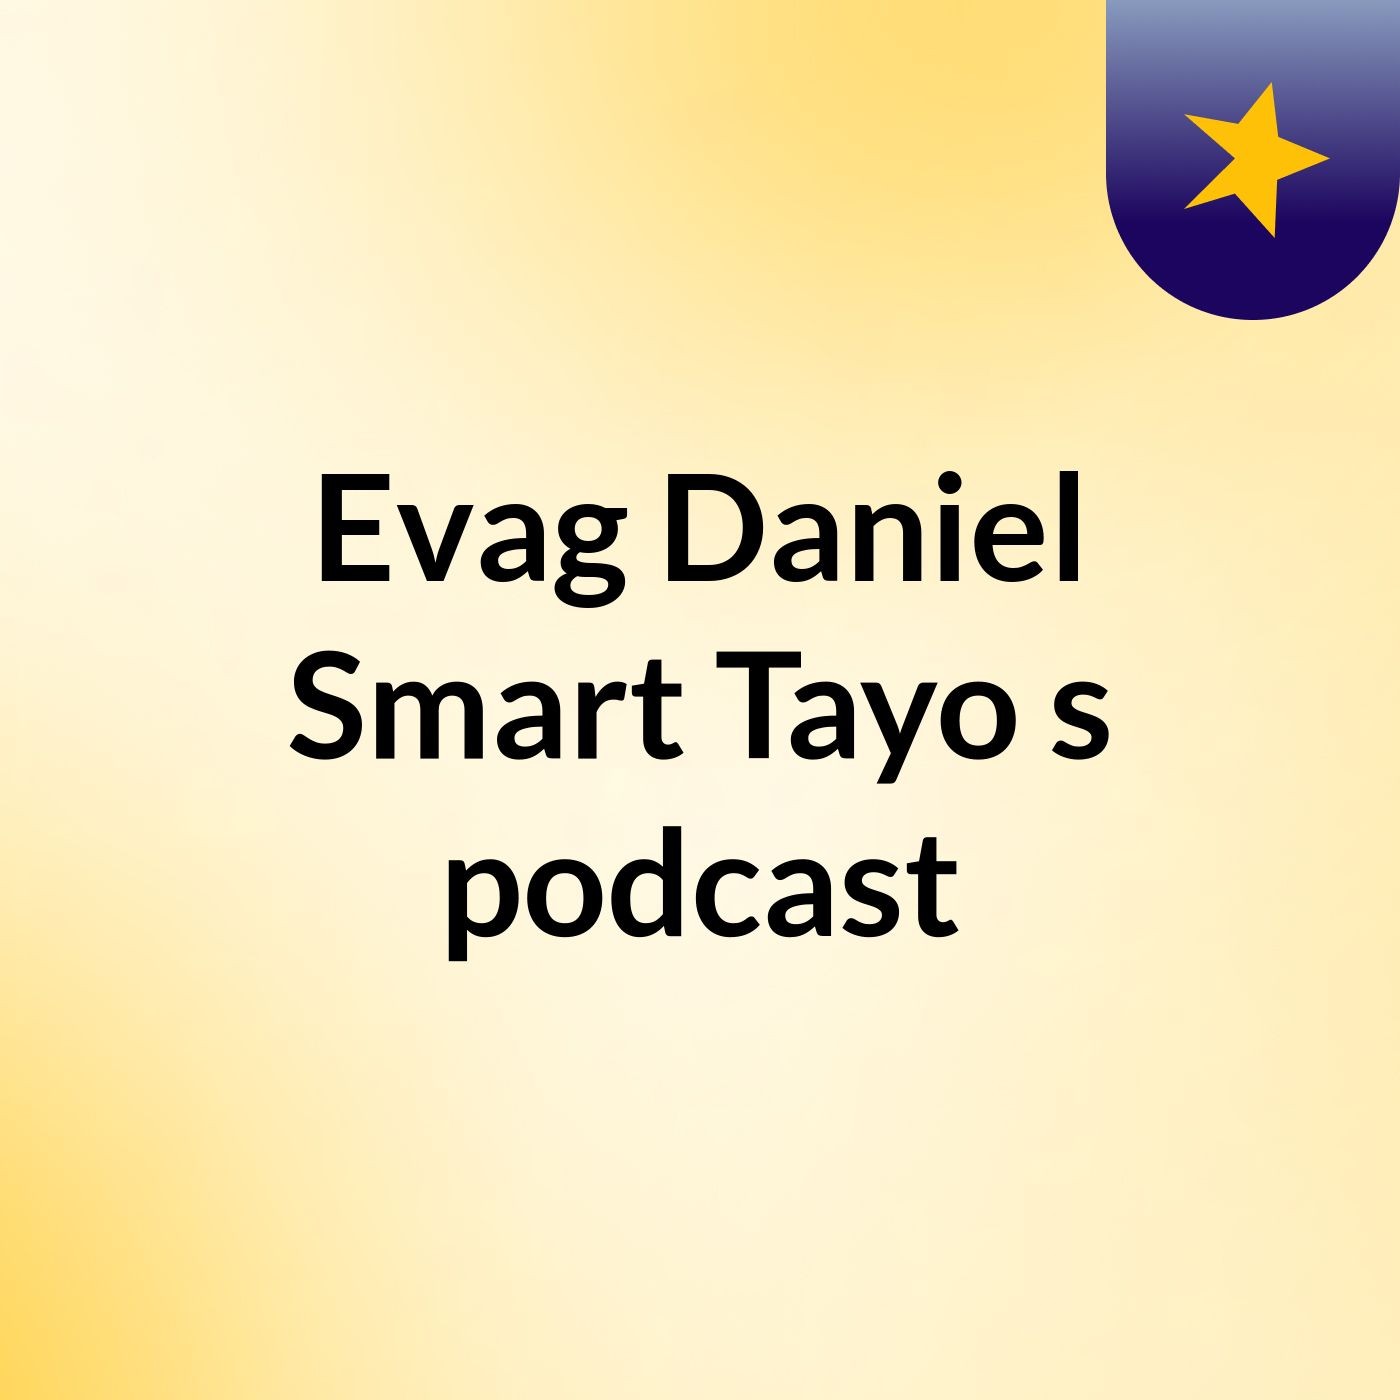 Episode 25 - Evag Daniel Smart Tayo's podcast